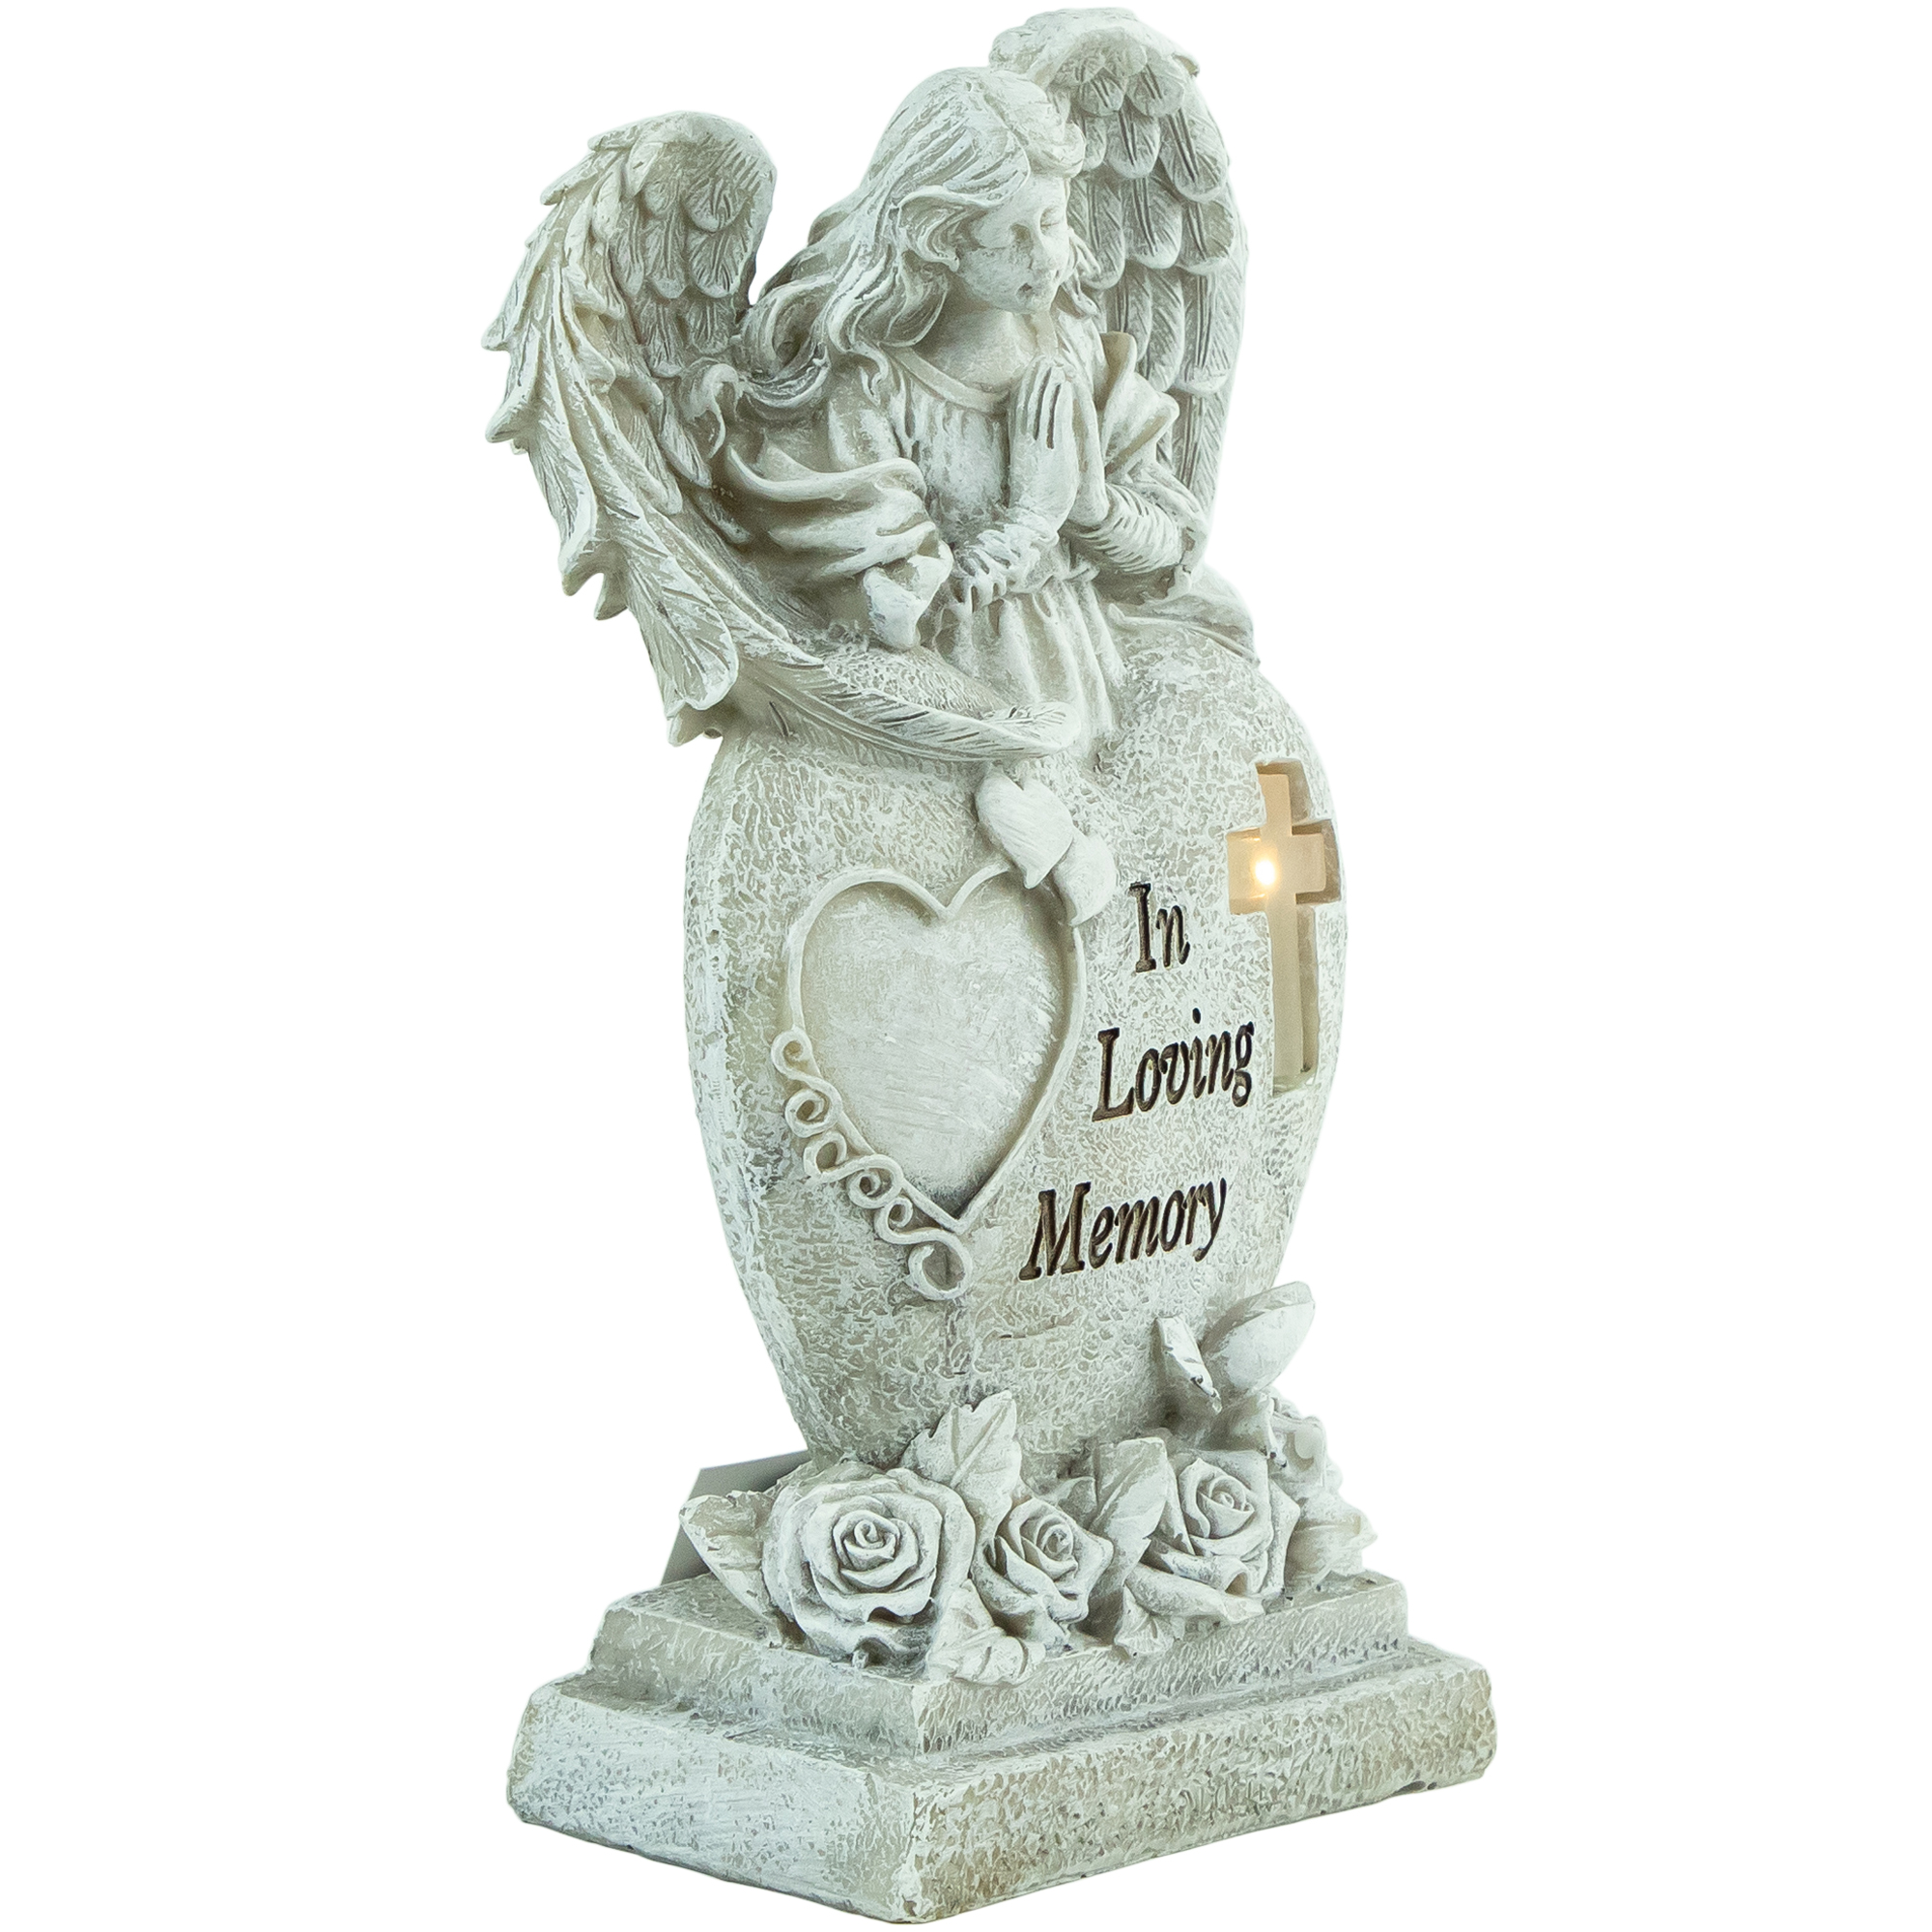 Northlight 10" Solar LED Lighted Praying Angel "In Loving Memory" Outdoor Garden Statue - image 3 of 5